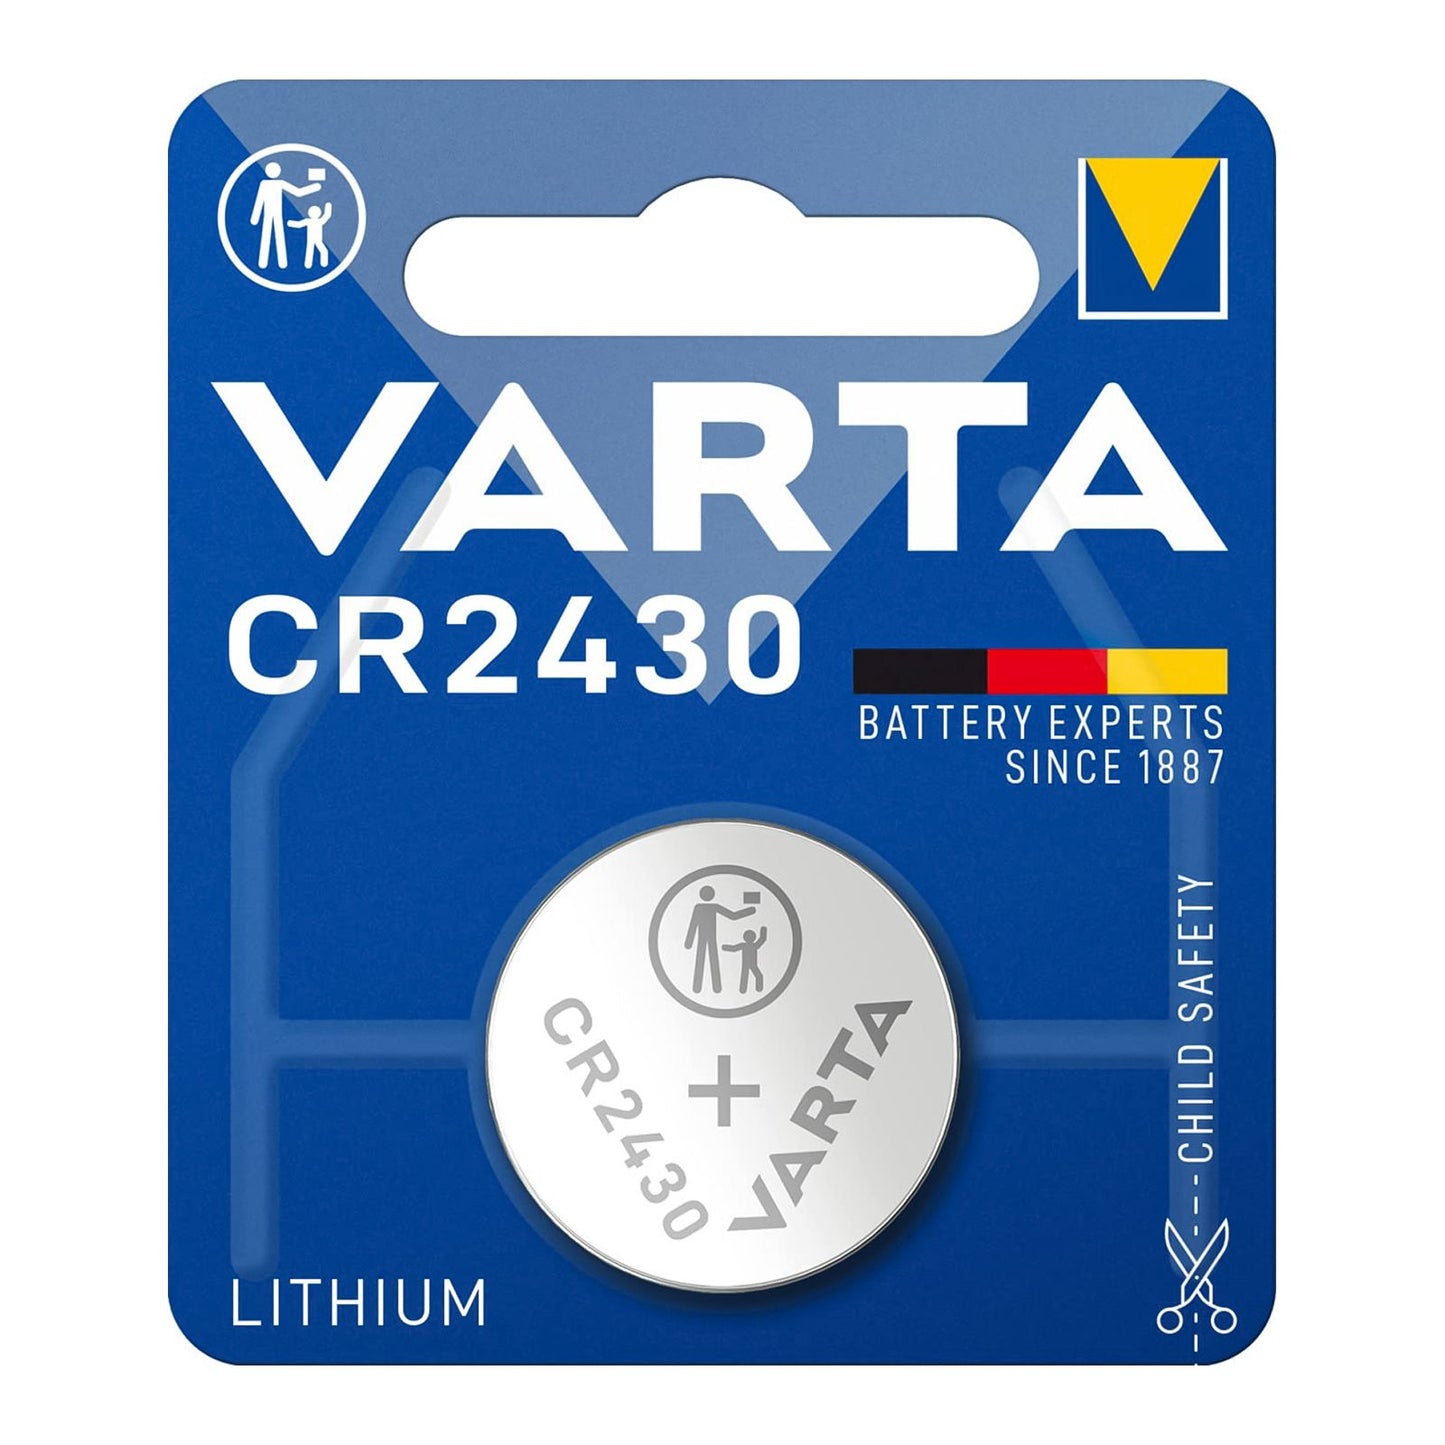 VARTA CR2430 Lithium coin cell battery 3V, flat cell, specialist, diameter 24.5mm